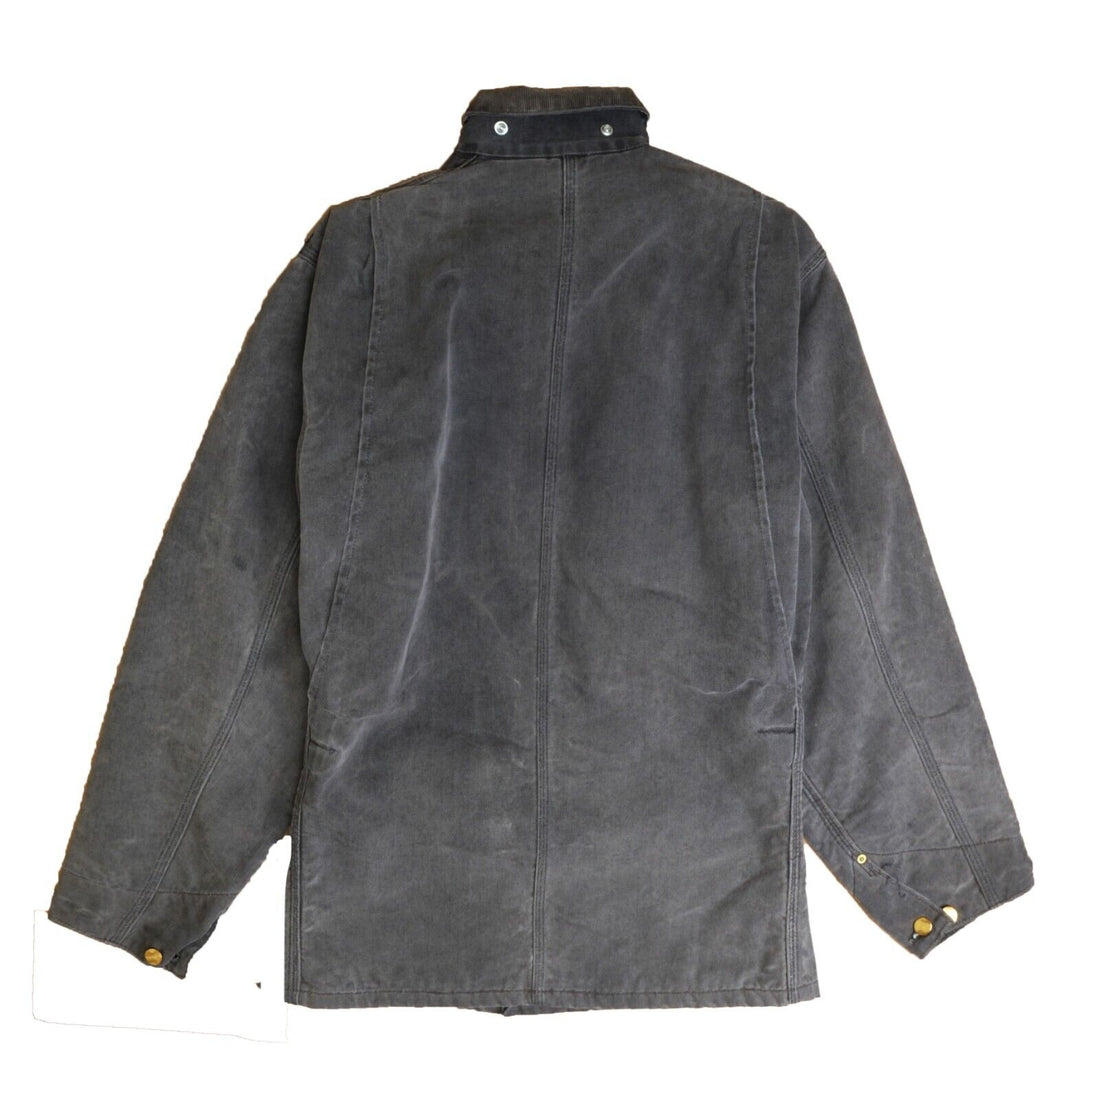 Vintage Carhartt Canvas Chore Work Jacket Size Large Black Blanket Lined